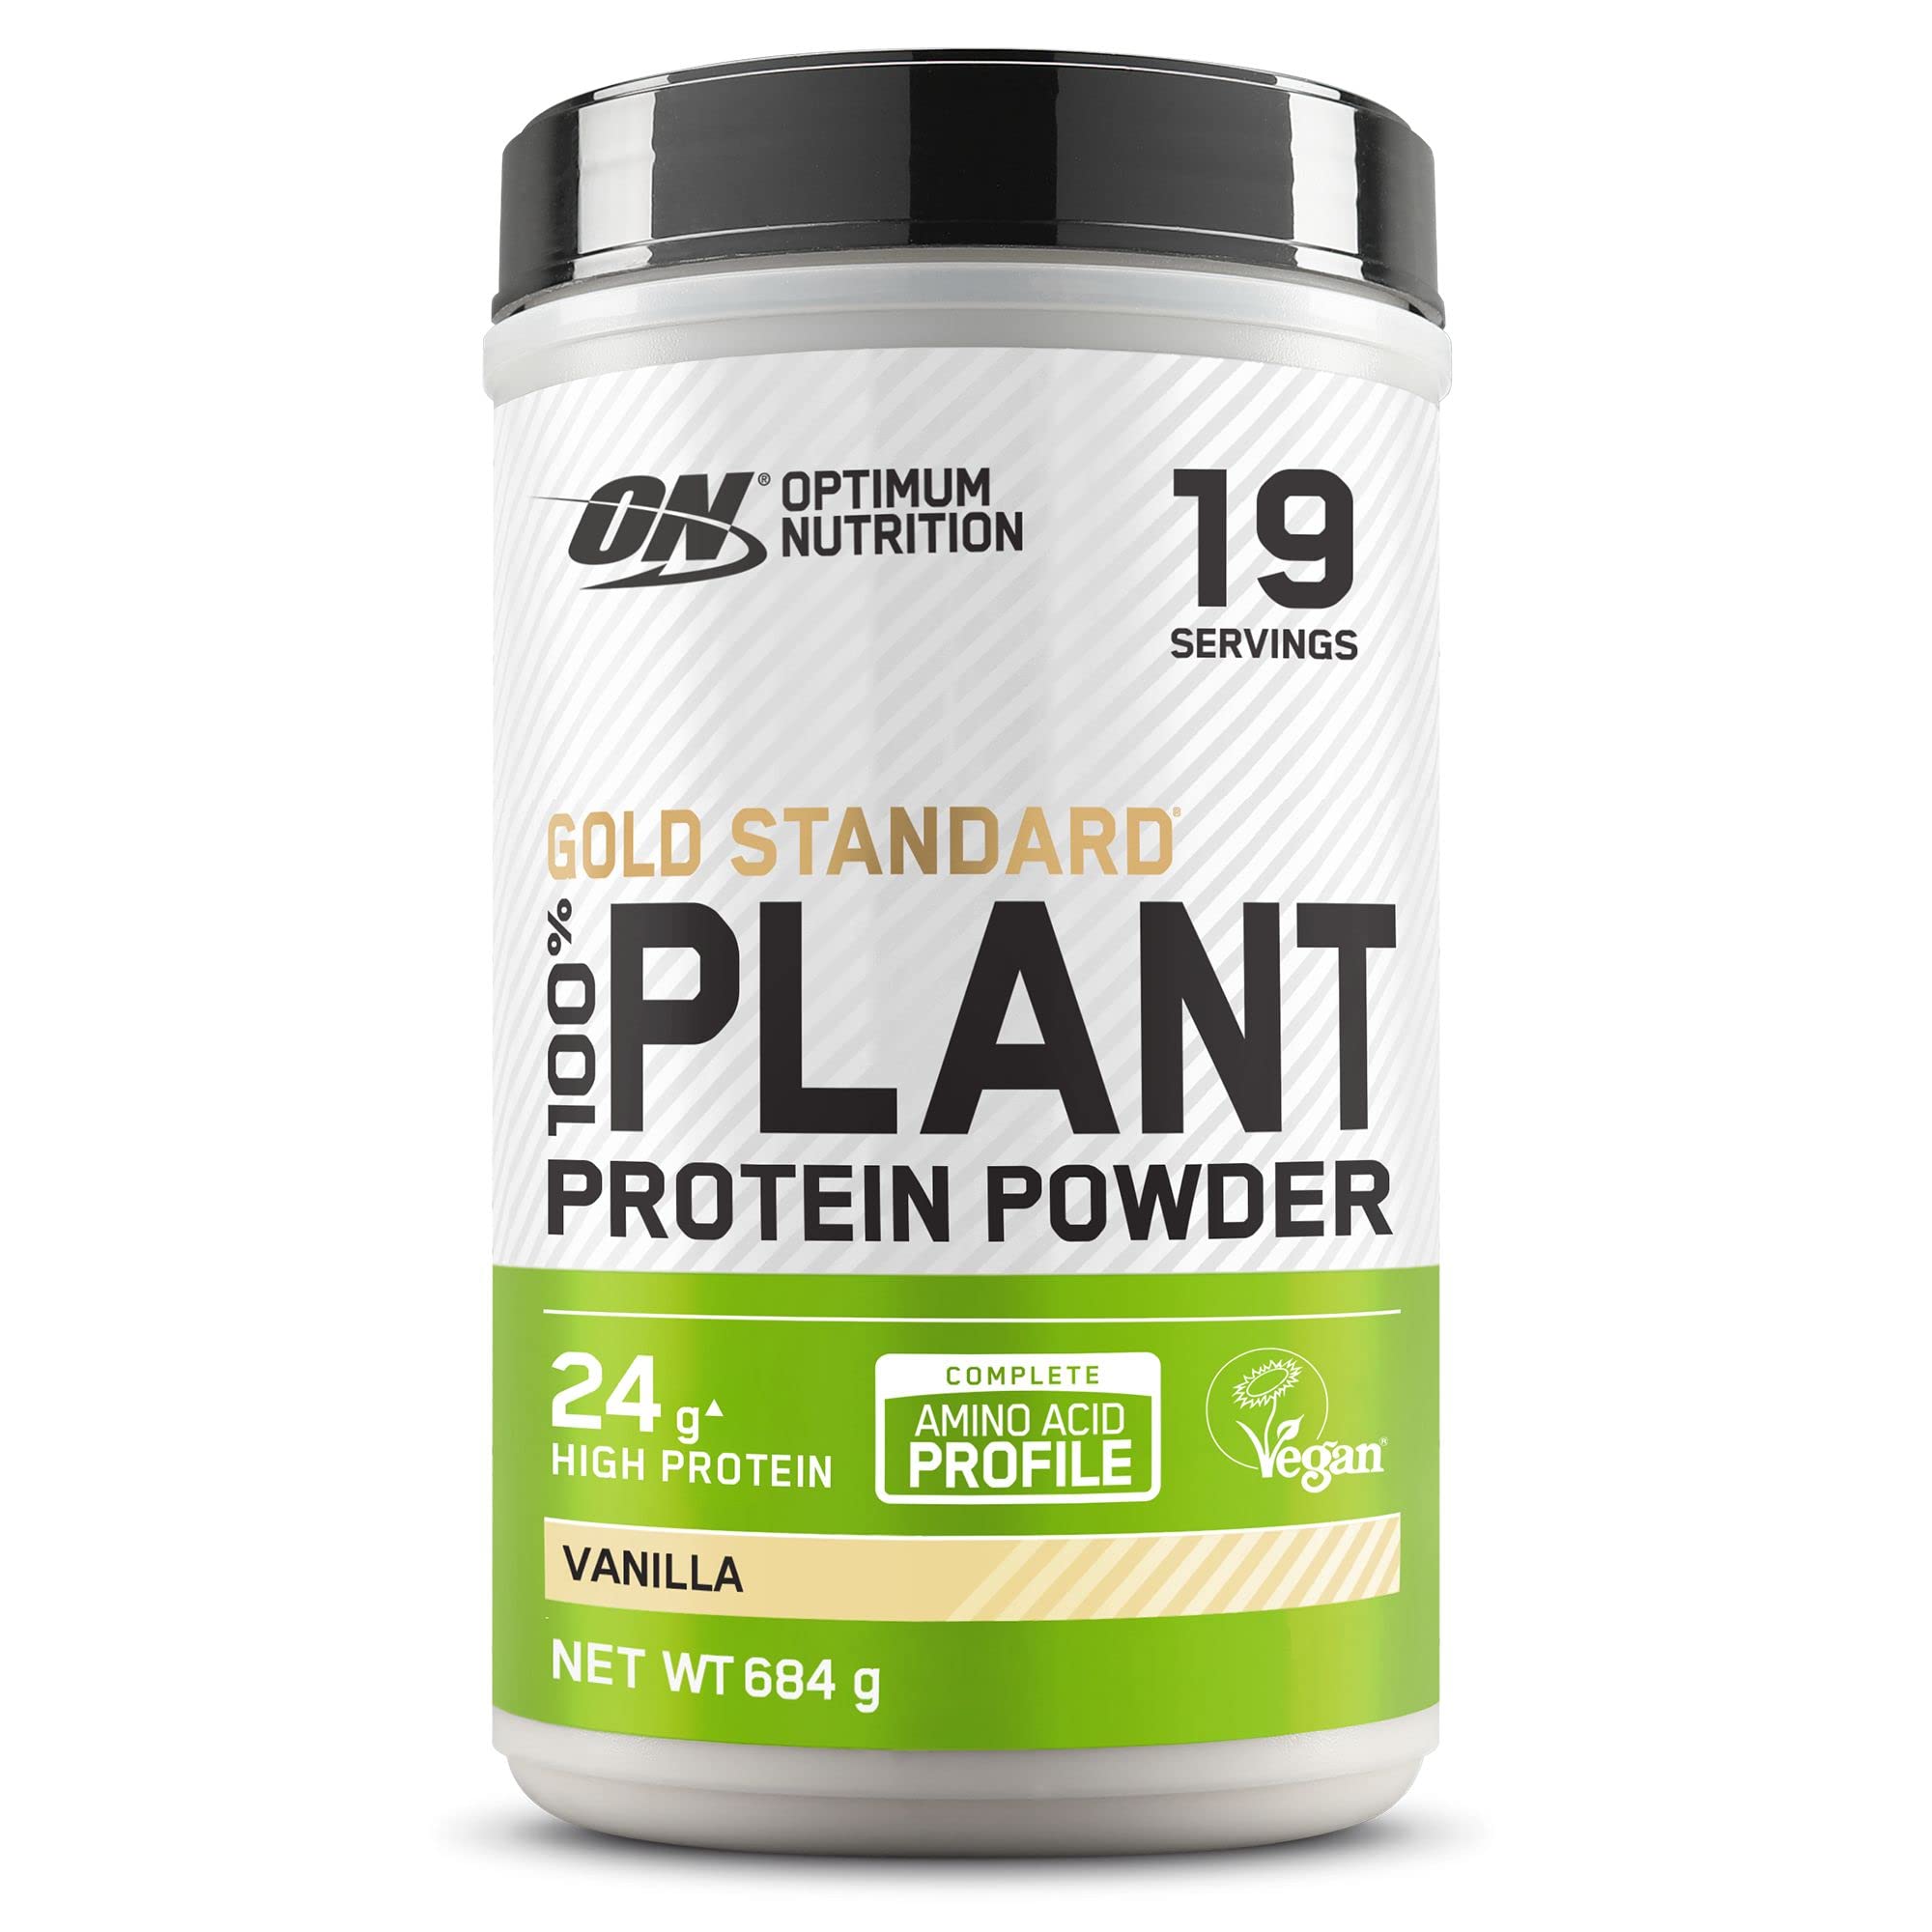 Optimum Nutrition ON Gold Standard 100% Plant Protein Vanilla Powder, Vegan, 19 Servings, 684g